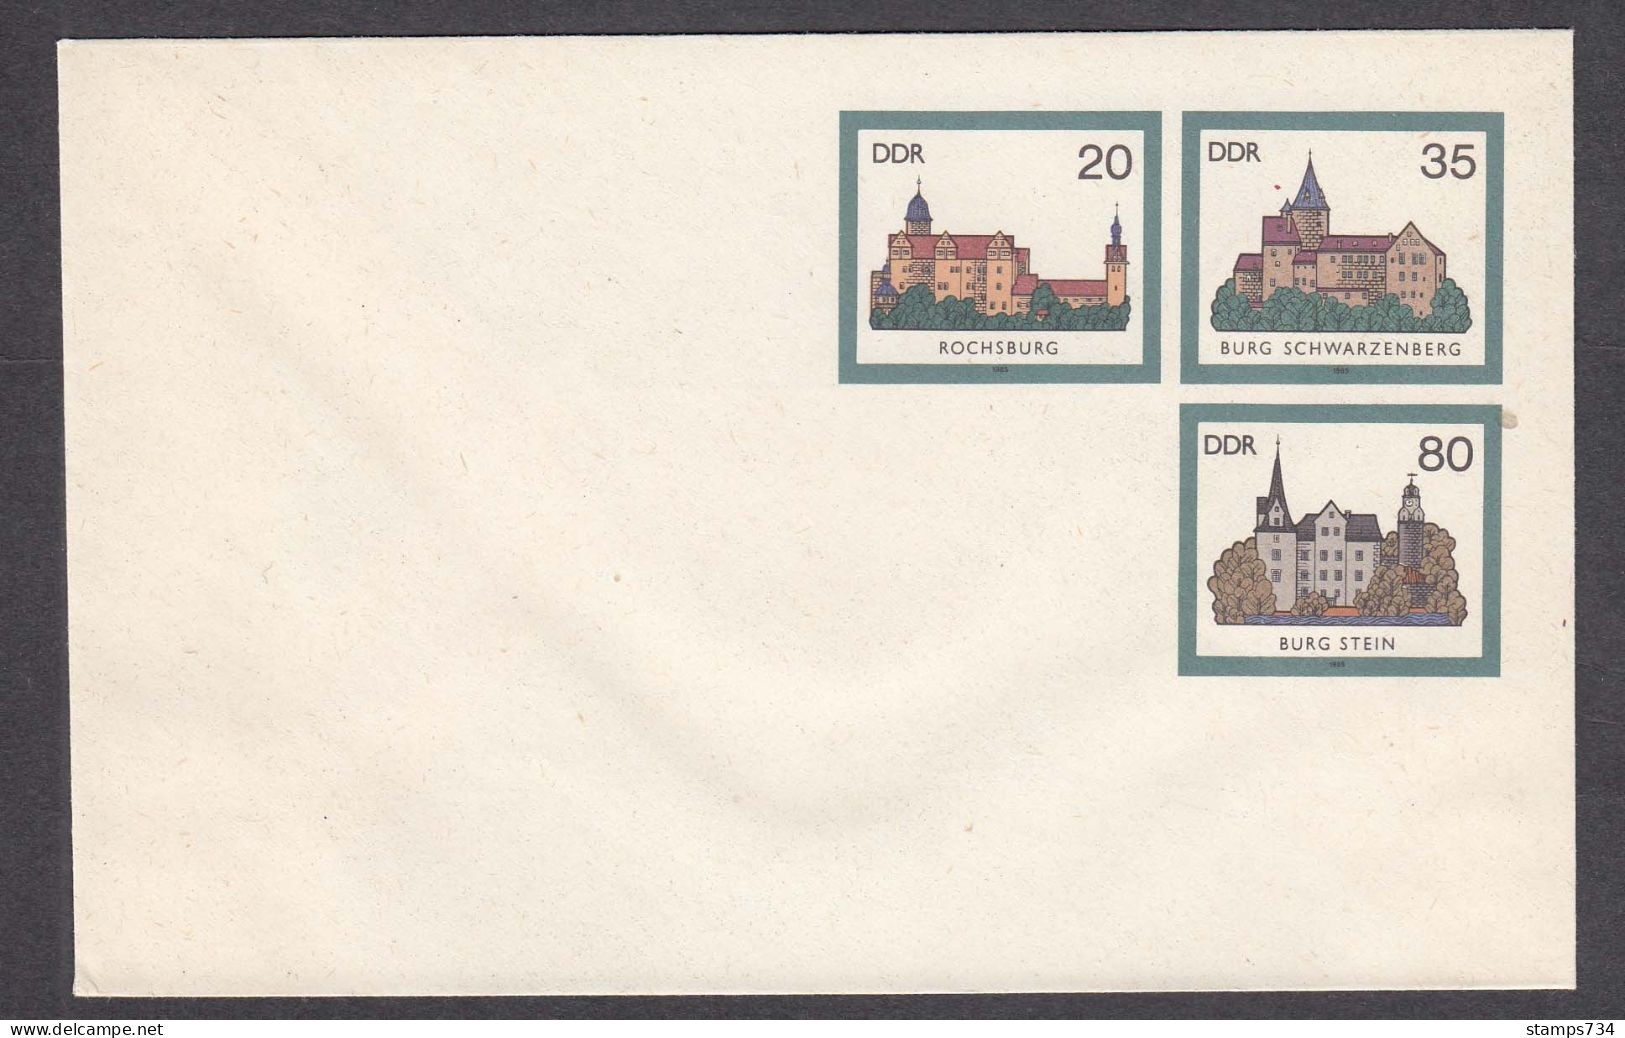 DDR 09/1985 - Castles, Post. Stationery (cover), Mint - Umschläge - Ungebraucht